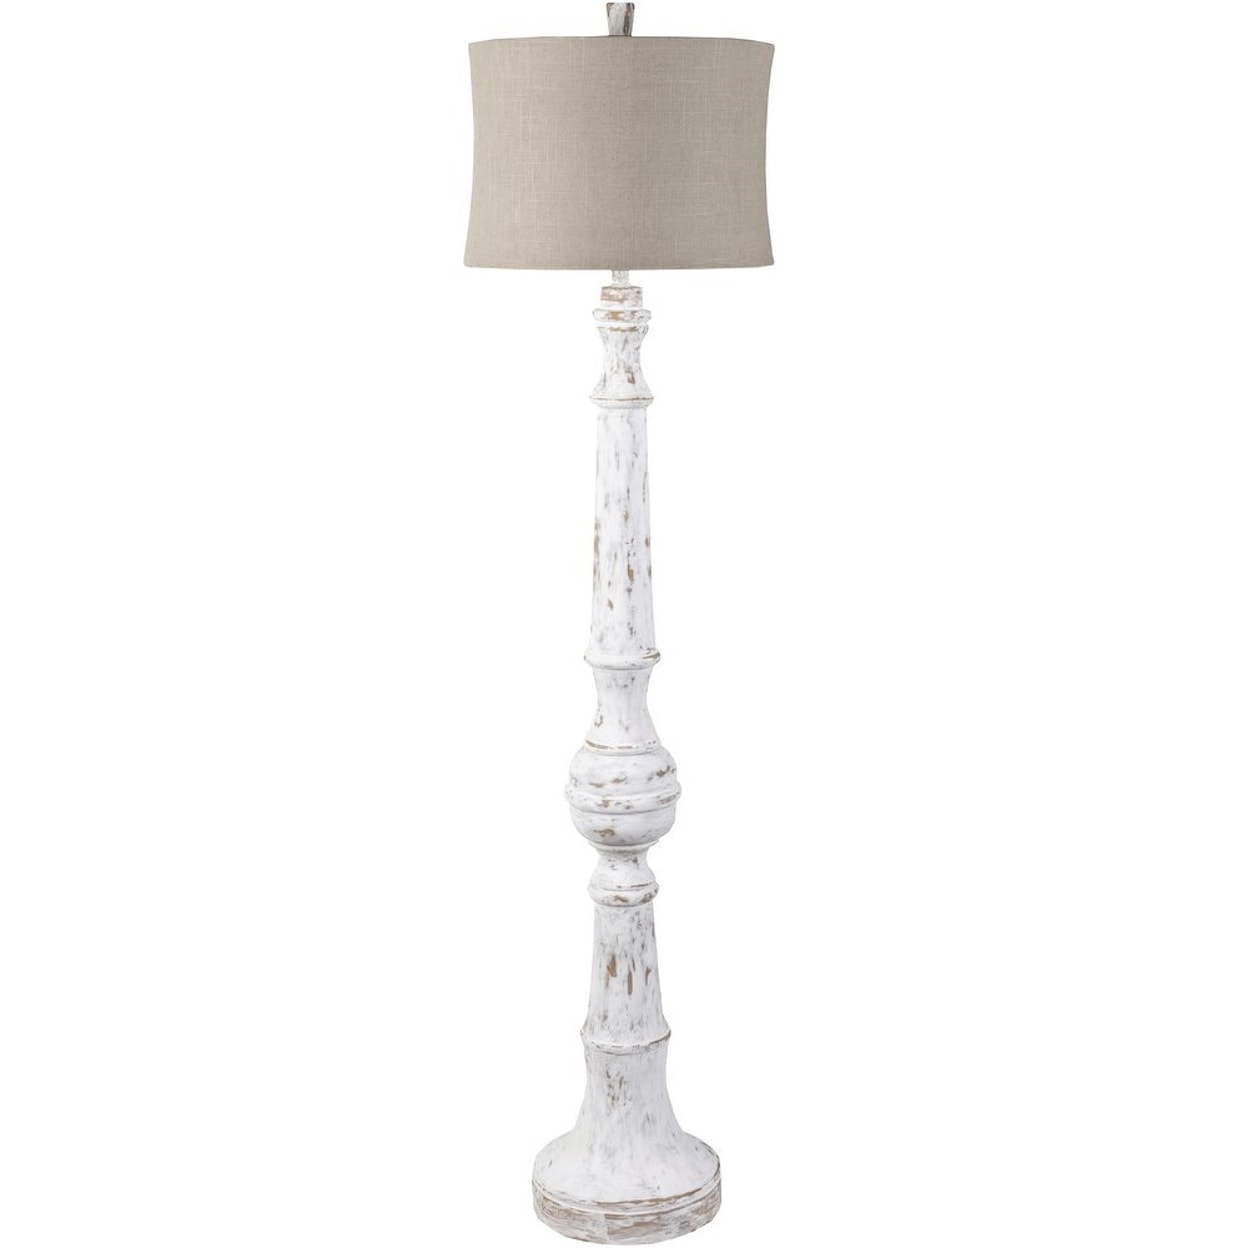 Surya Lamps Weathered White Rustic Floor Lamp